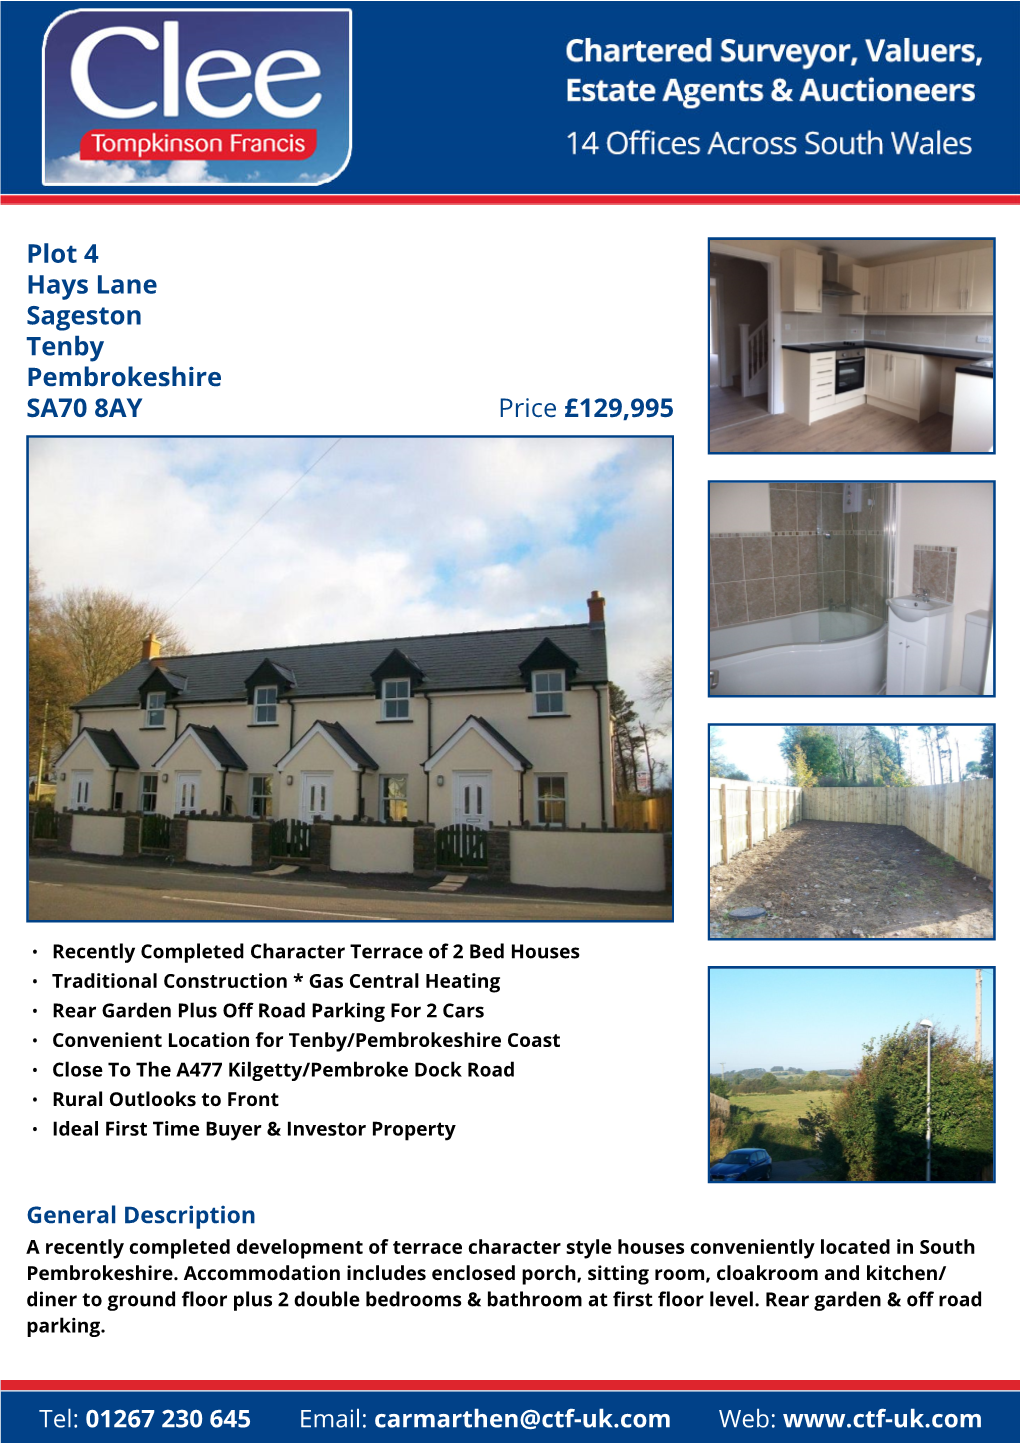 Plot 4 Hays Lane Sageston Tenby Pembrokeshire Price £129,995